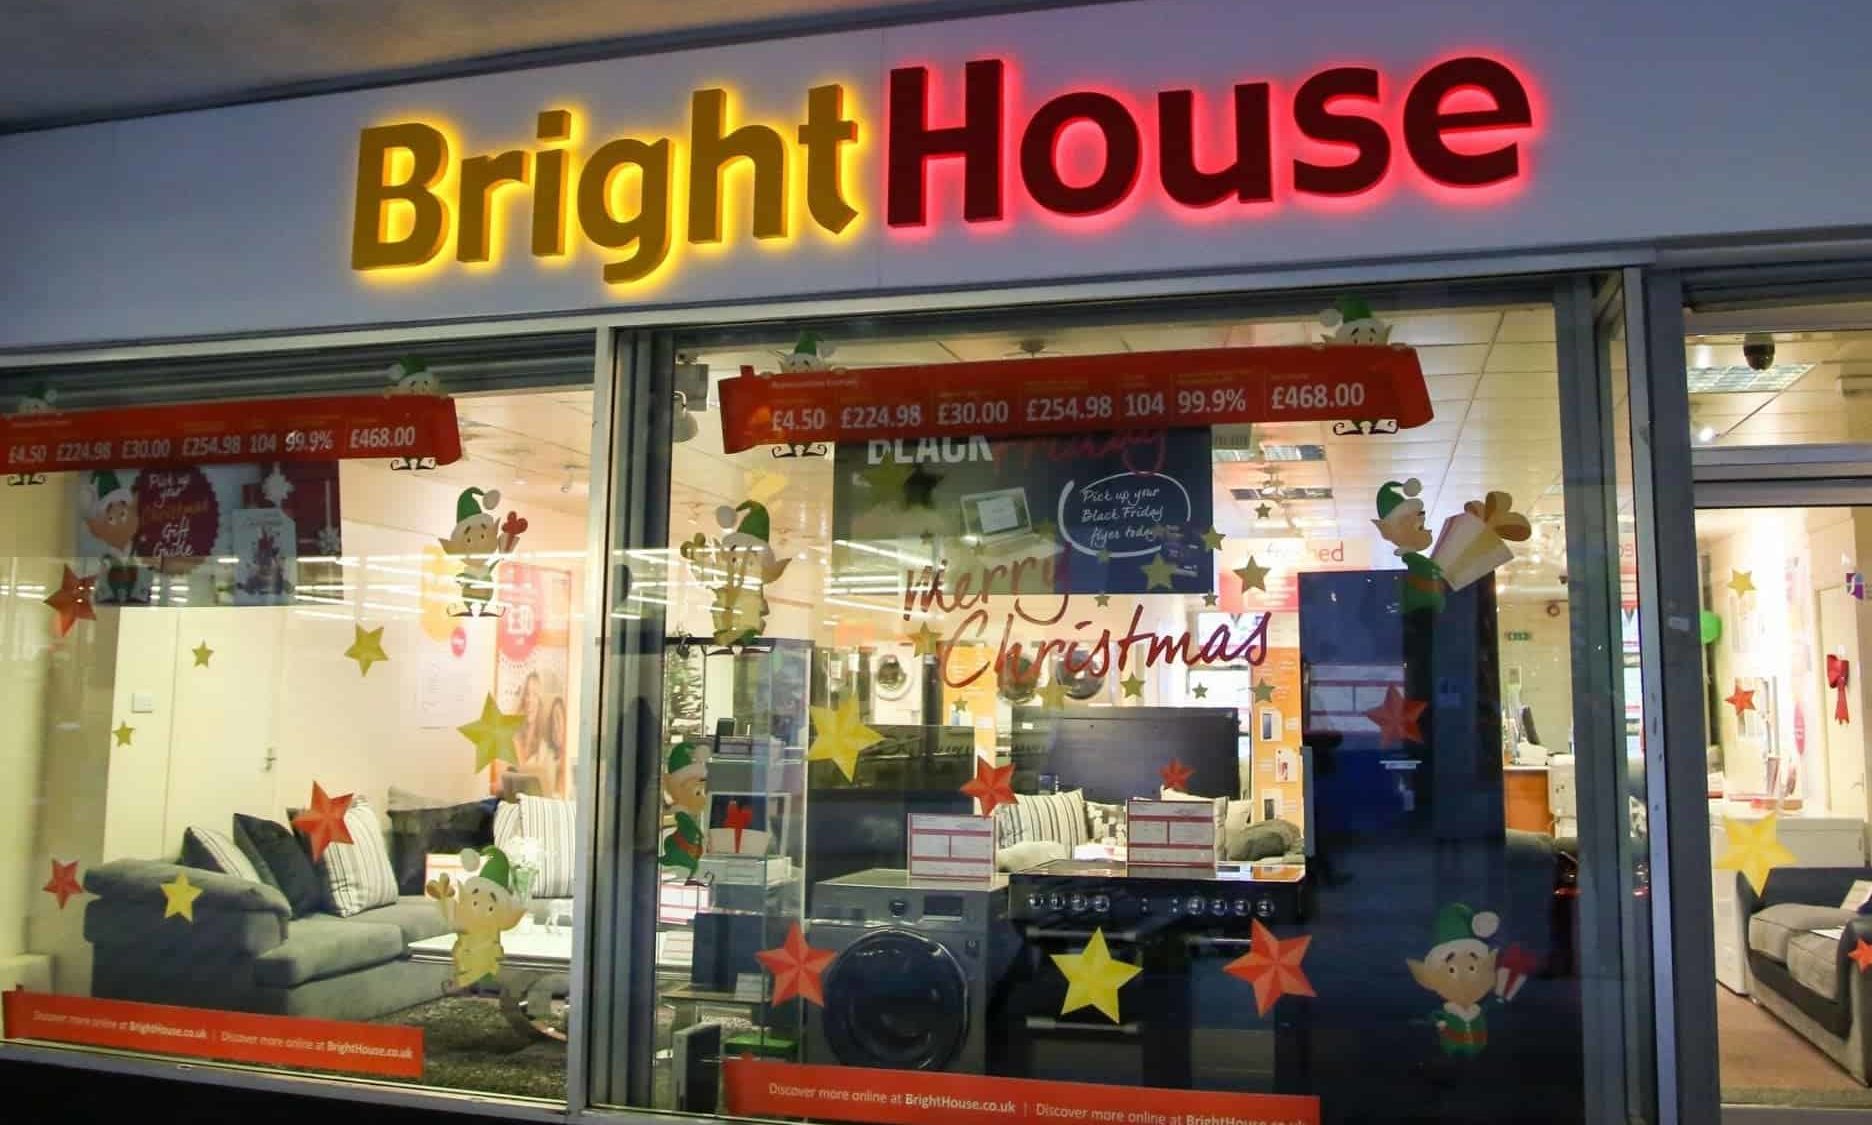 BrightHouse future looks shaky